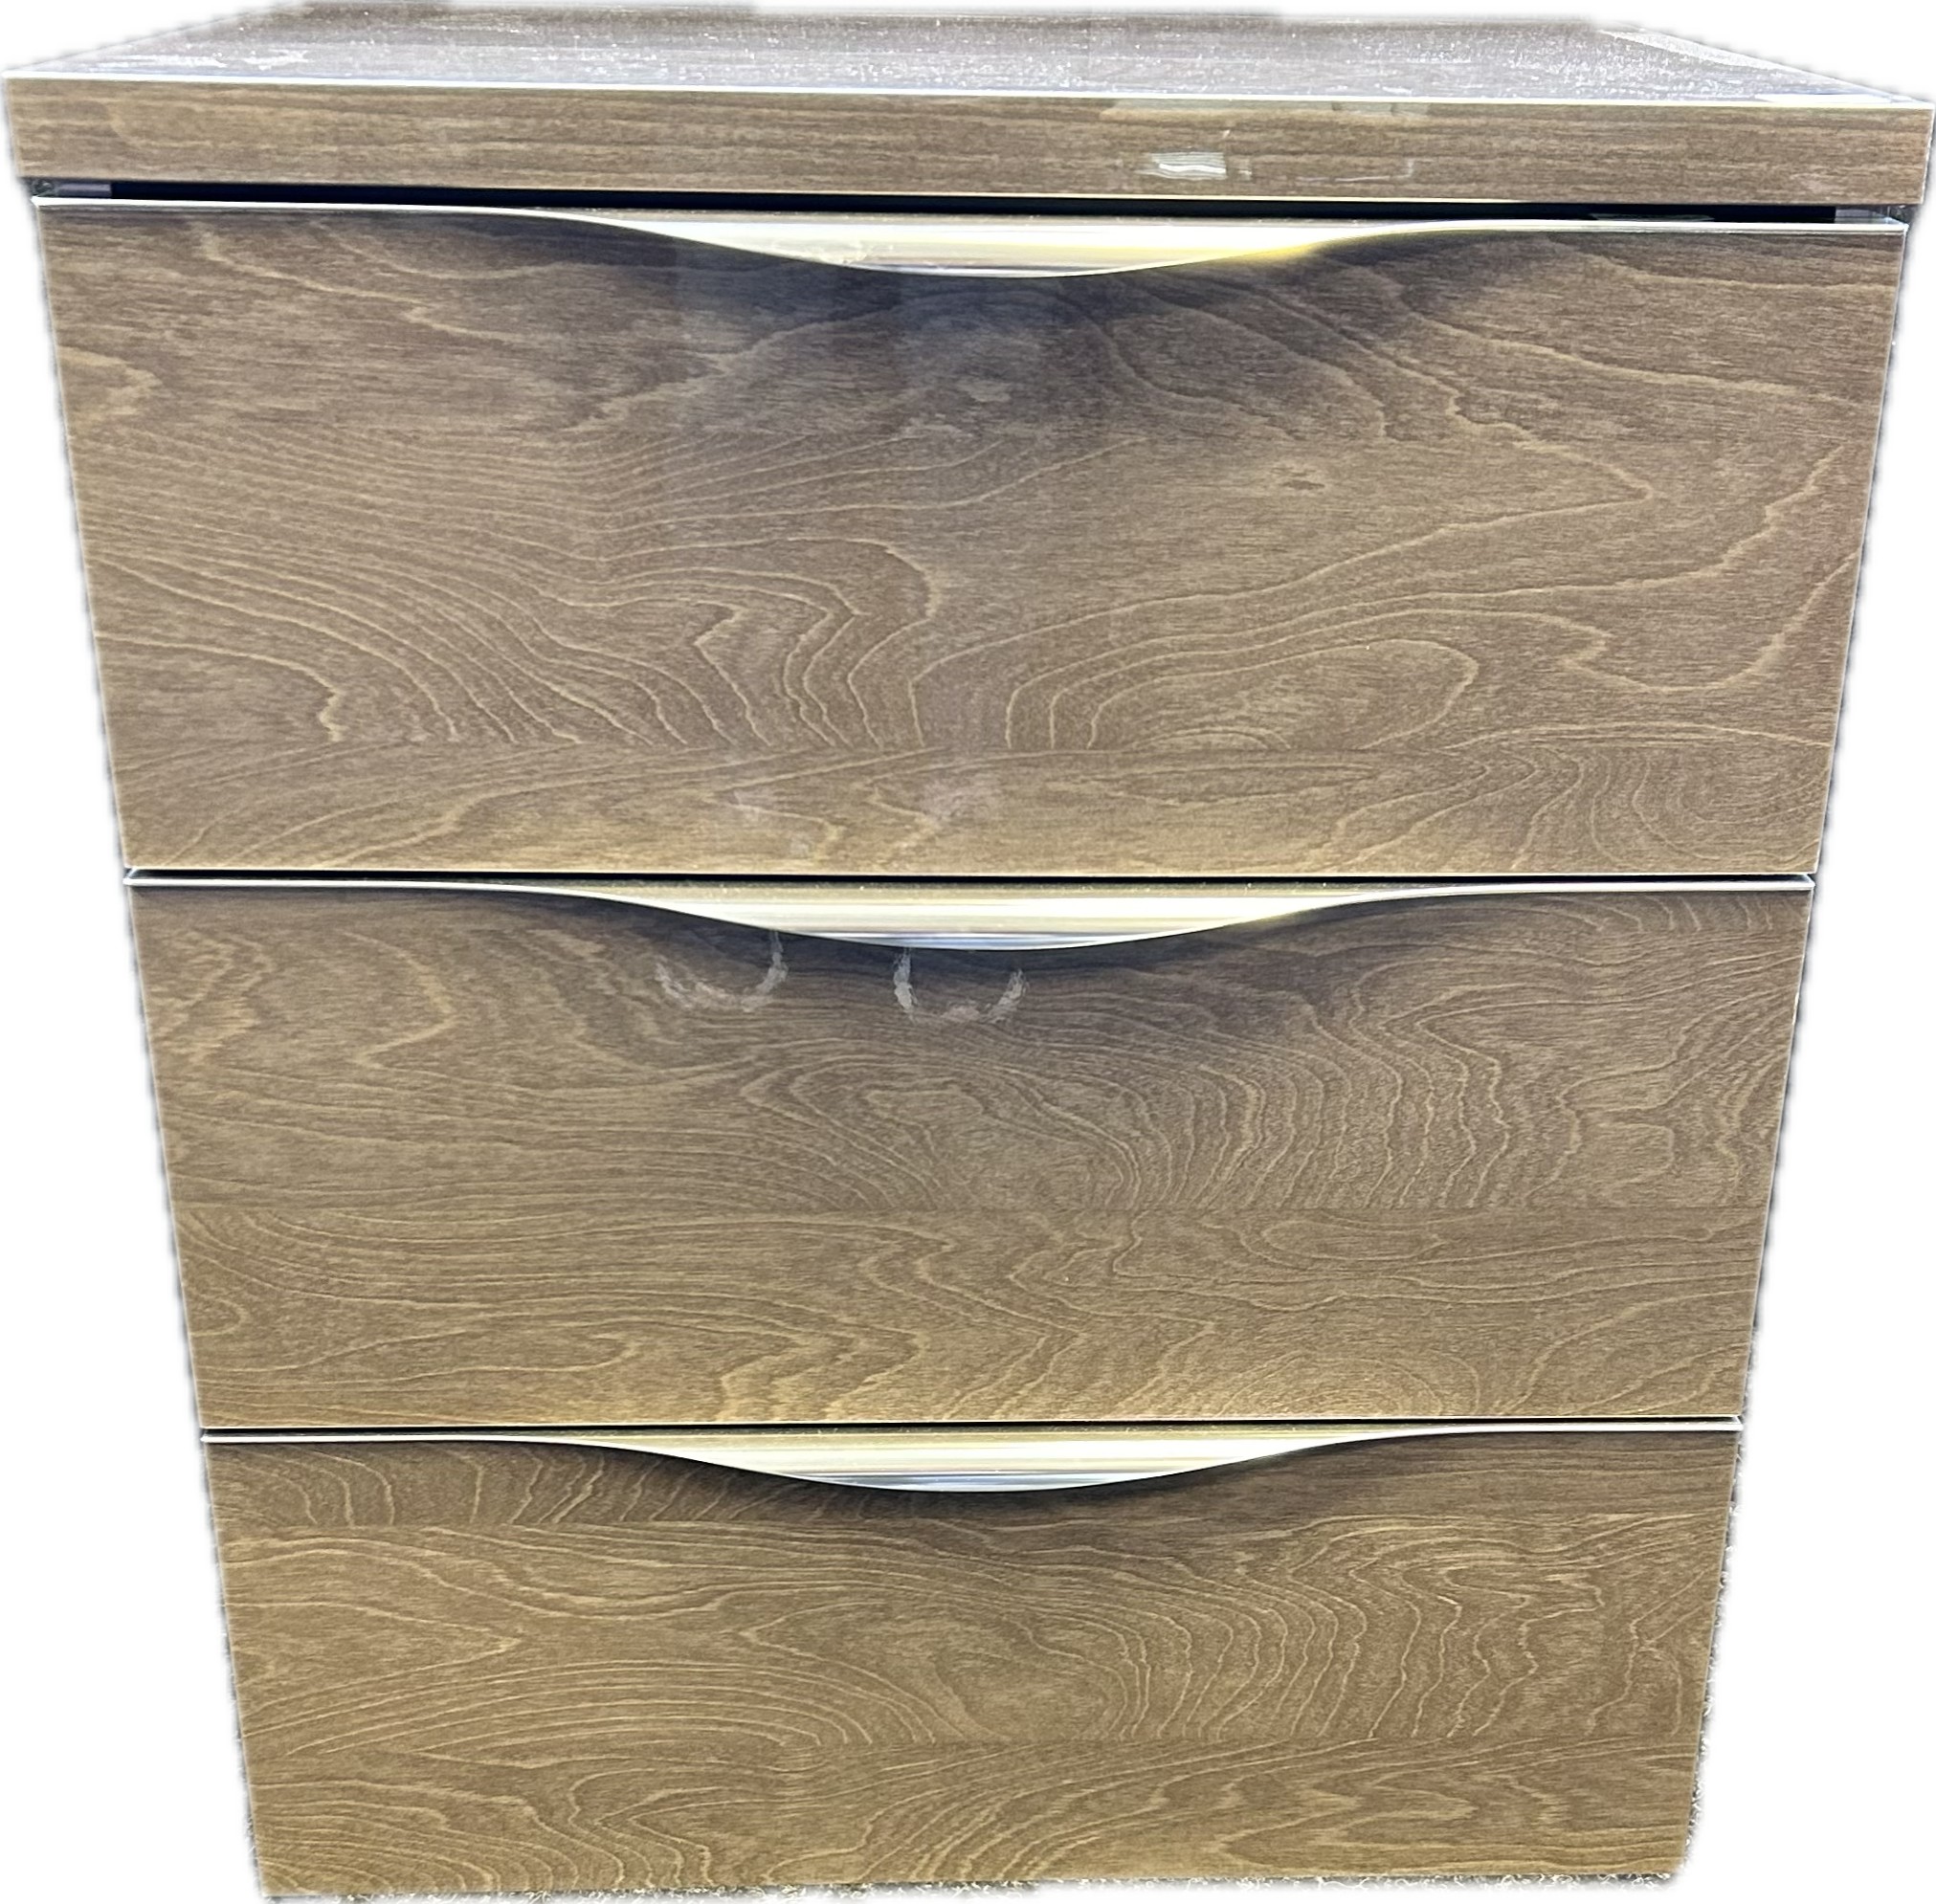 Italian Designer [Modum] bedside chest of three drawers in grey [76x60x48cm] - Image 4 of 4